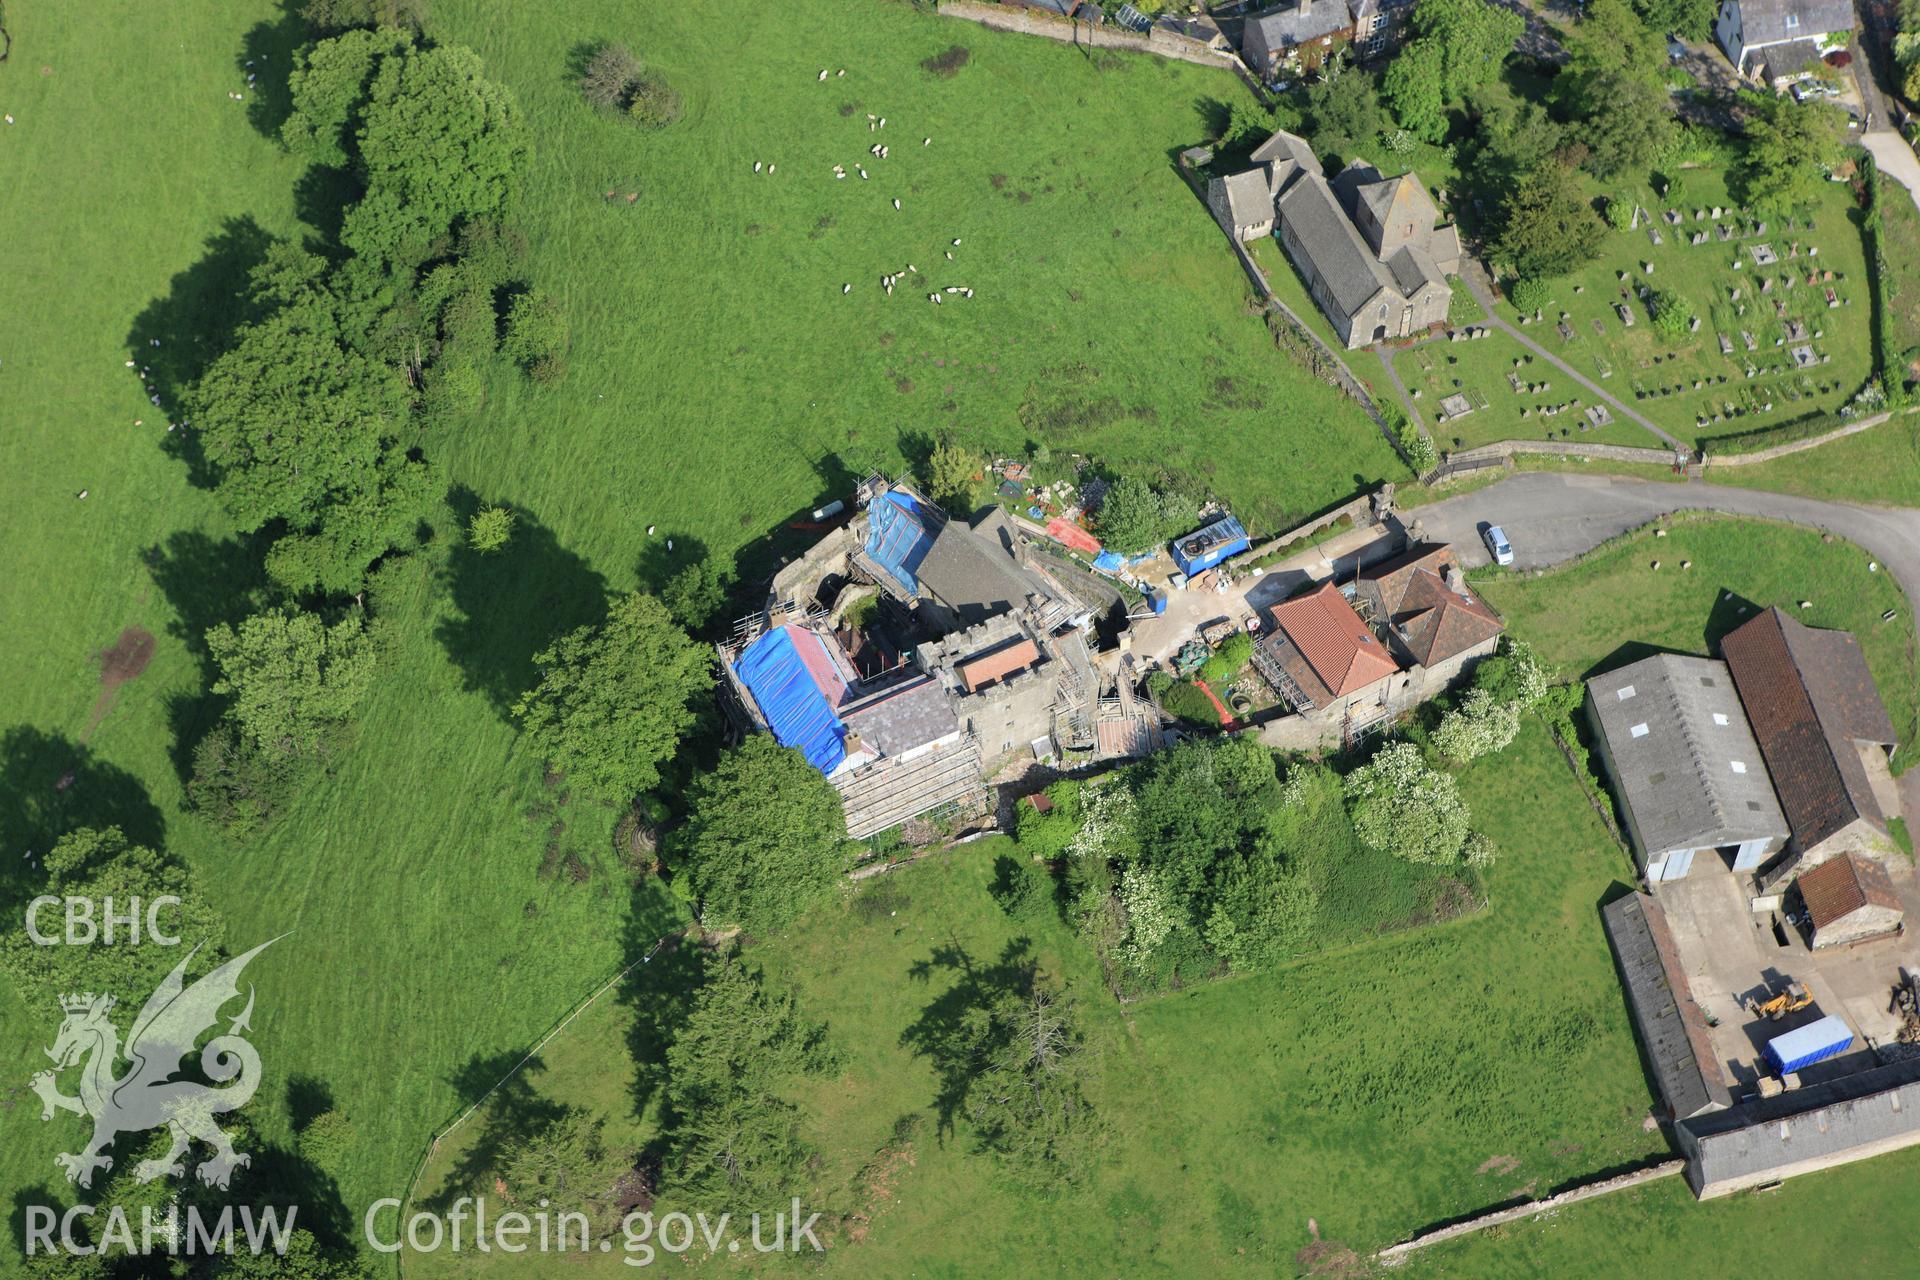 RCAHMW colour oblique aerial photograph of Penhow Castle. Taken on 11 June 2009 by Toby Driver